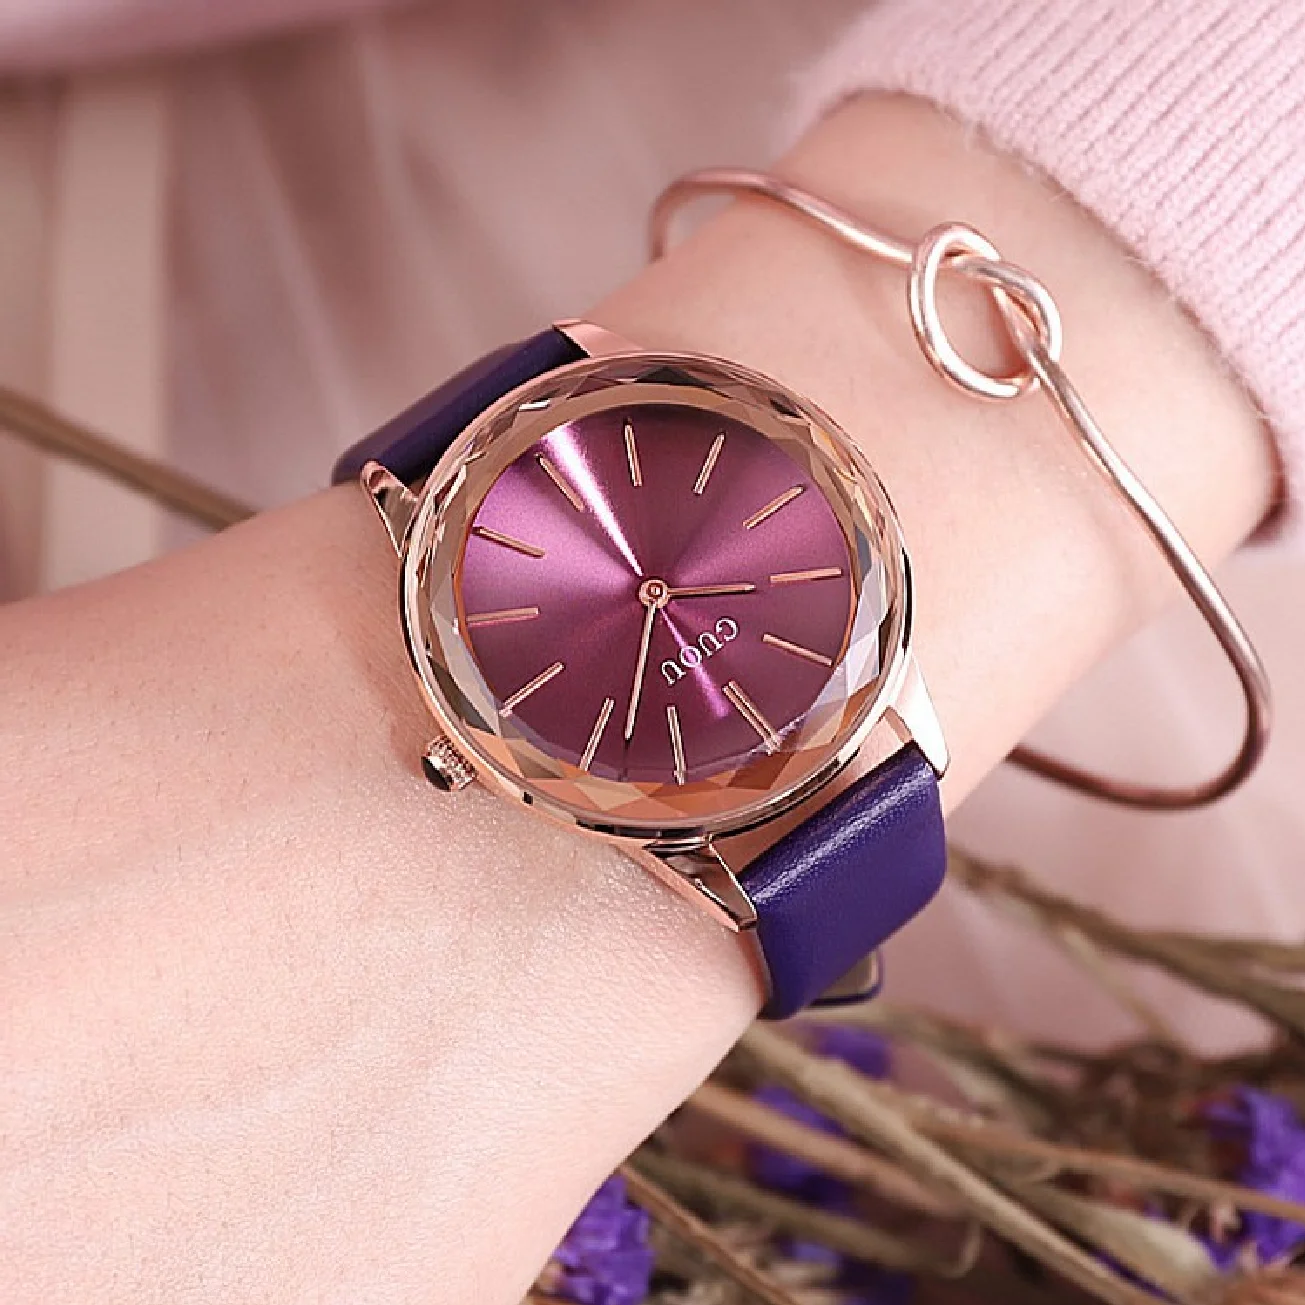 2018 Top Guou Brand Simple Style Crystal Black White Red Purple Genuine Leather Quartz Bracelet Wrist Watch For Women Girls enlarge